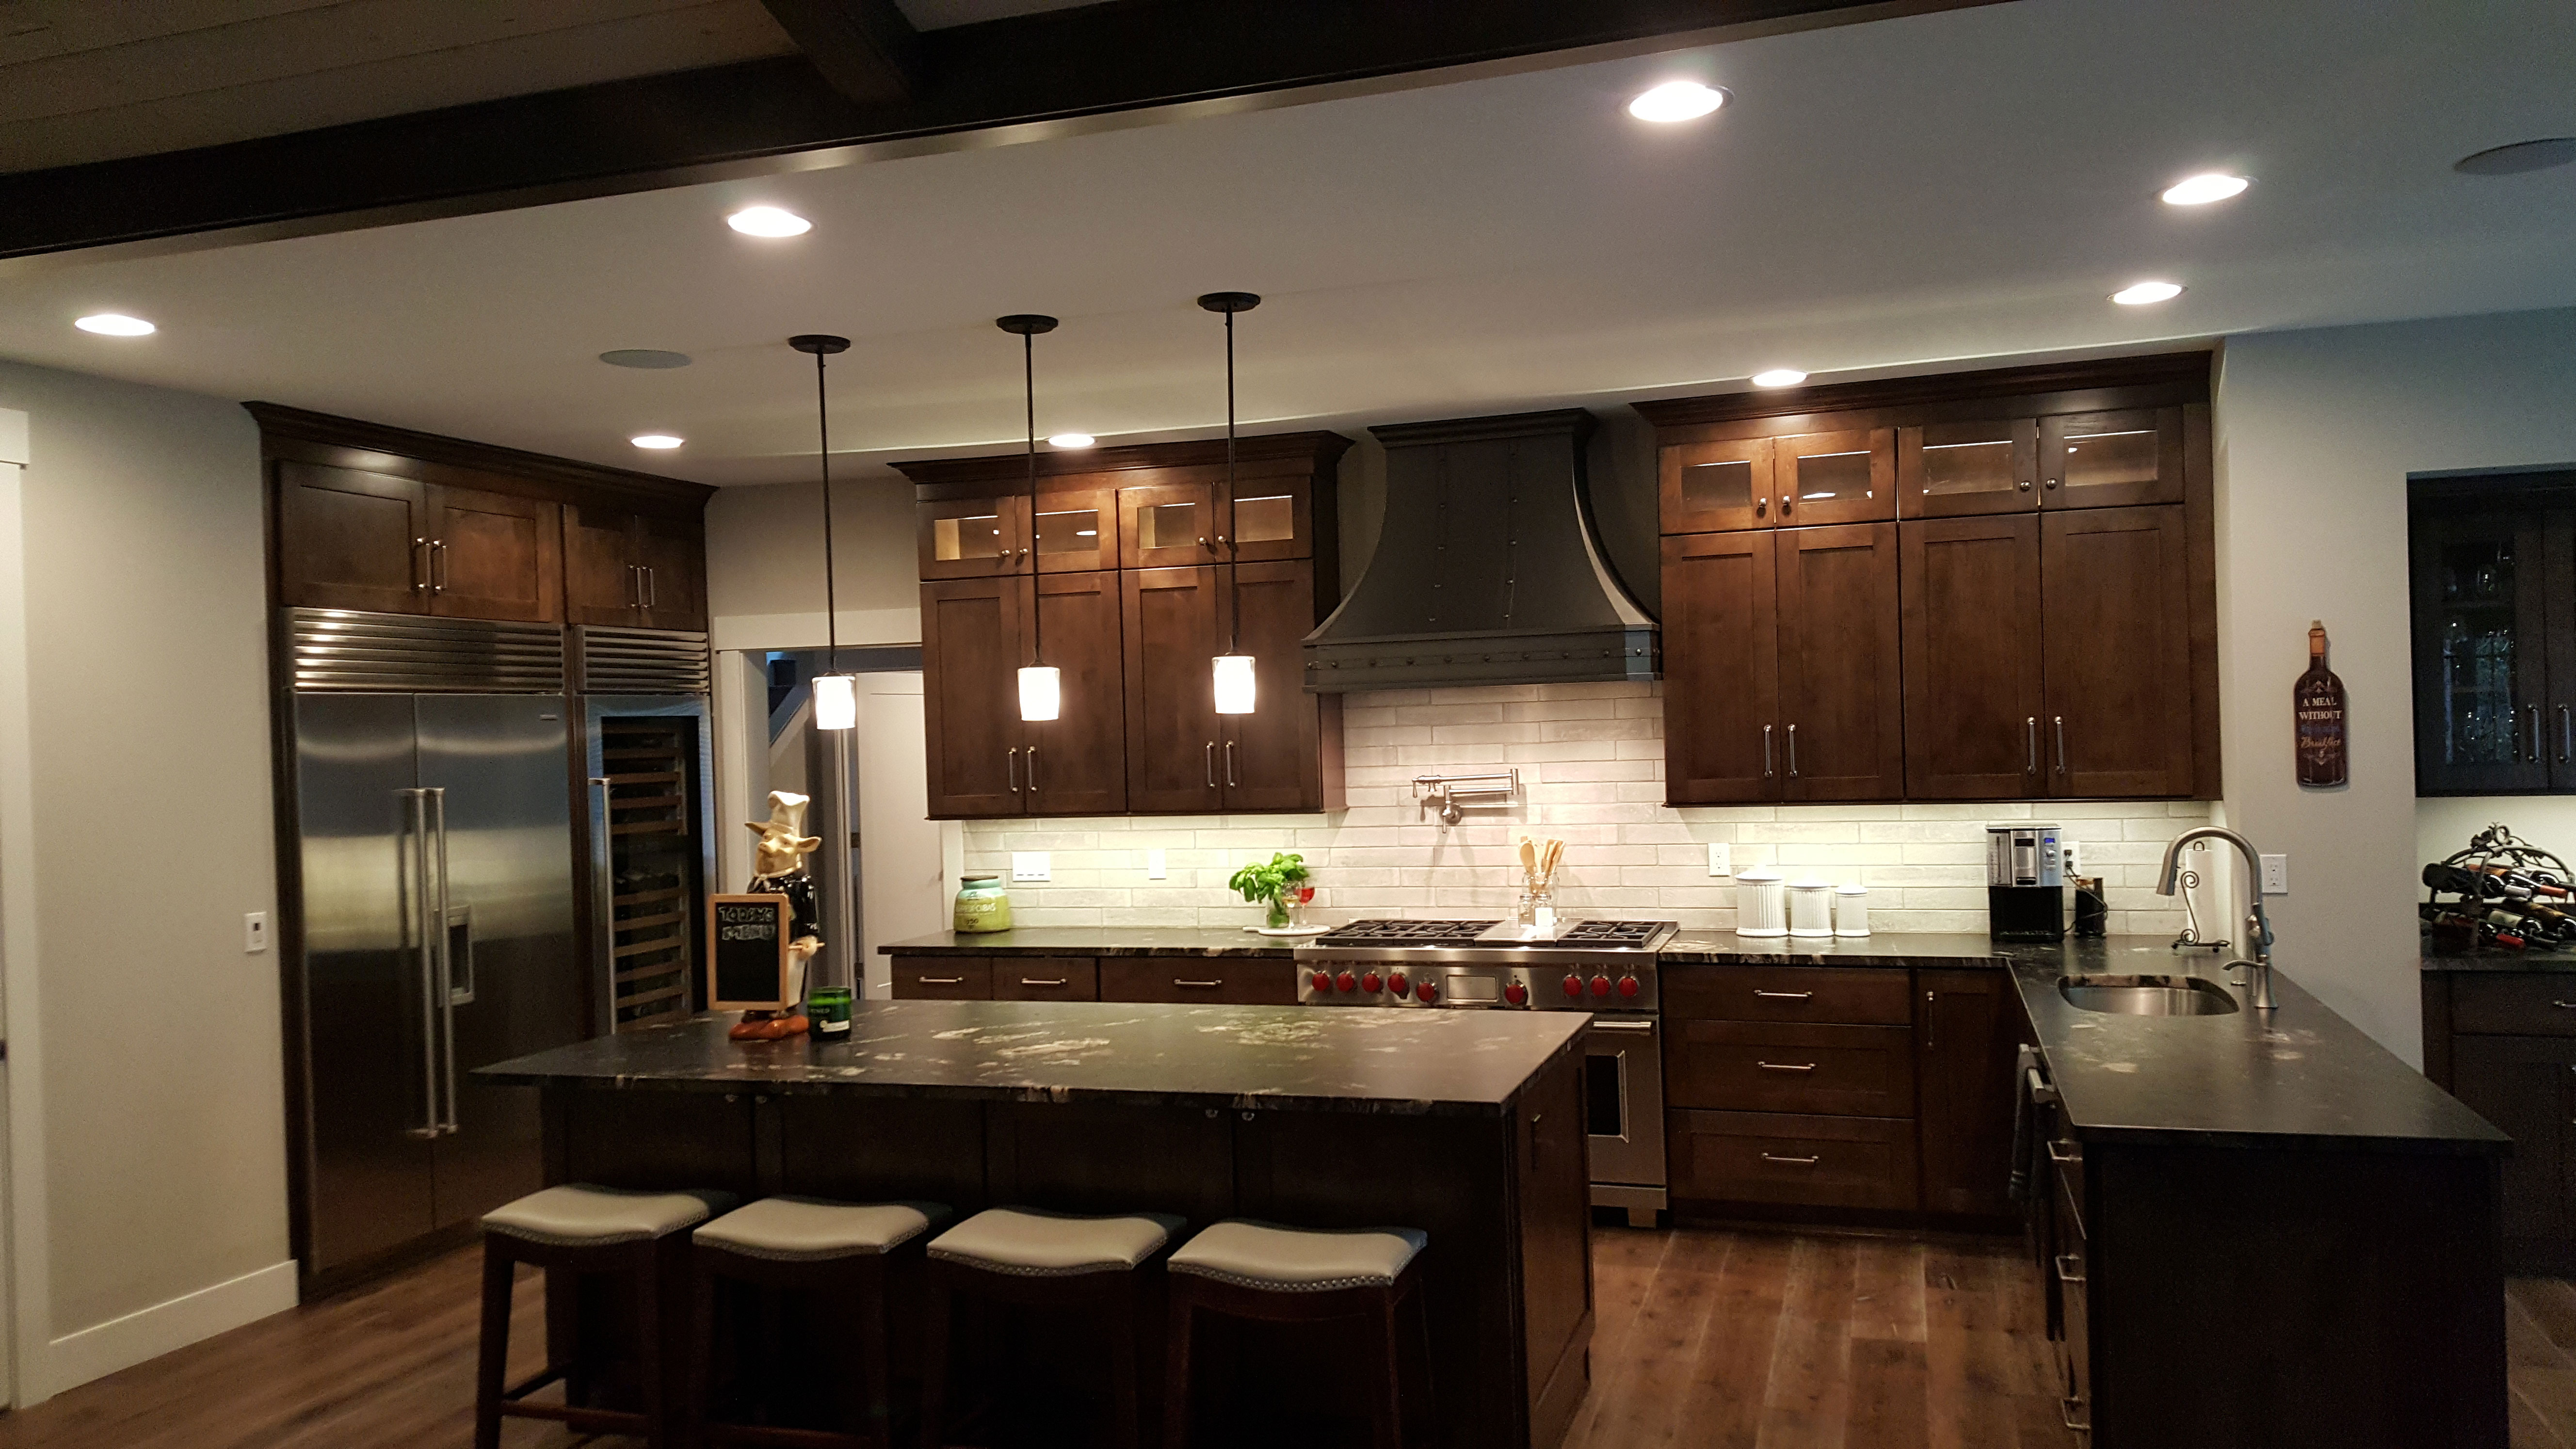 Enhance your traditional kitchen with creative range hood brown kitchen cabinets, black kitchen countertops and stylish brick backsplash